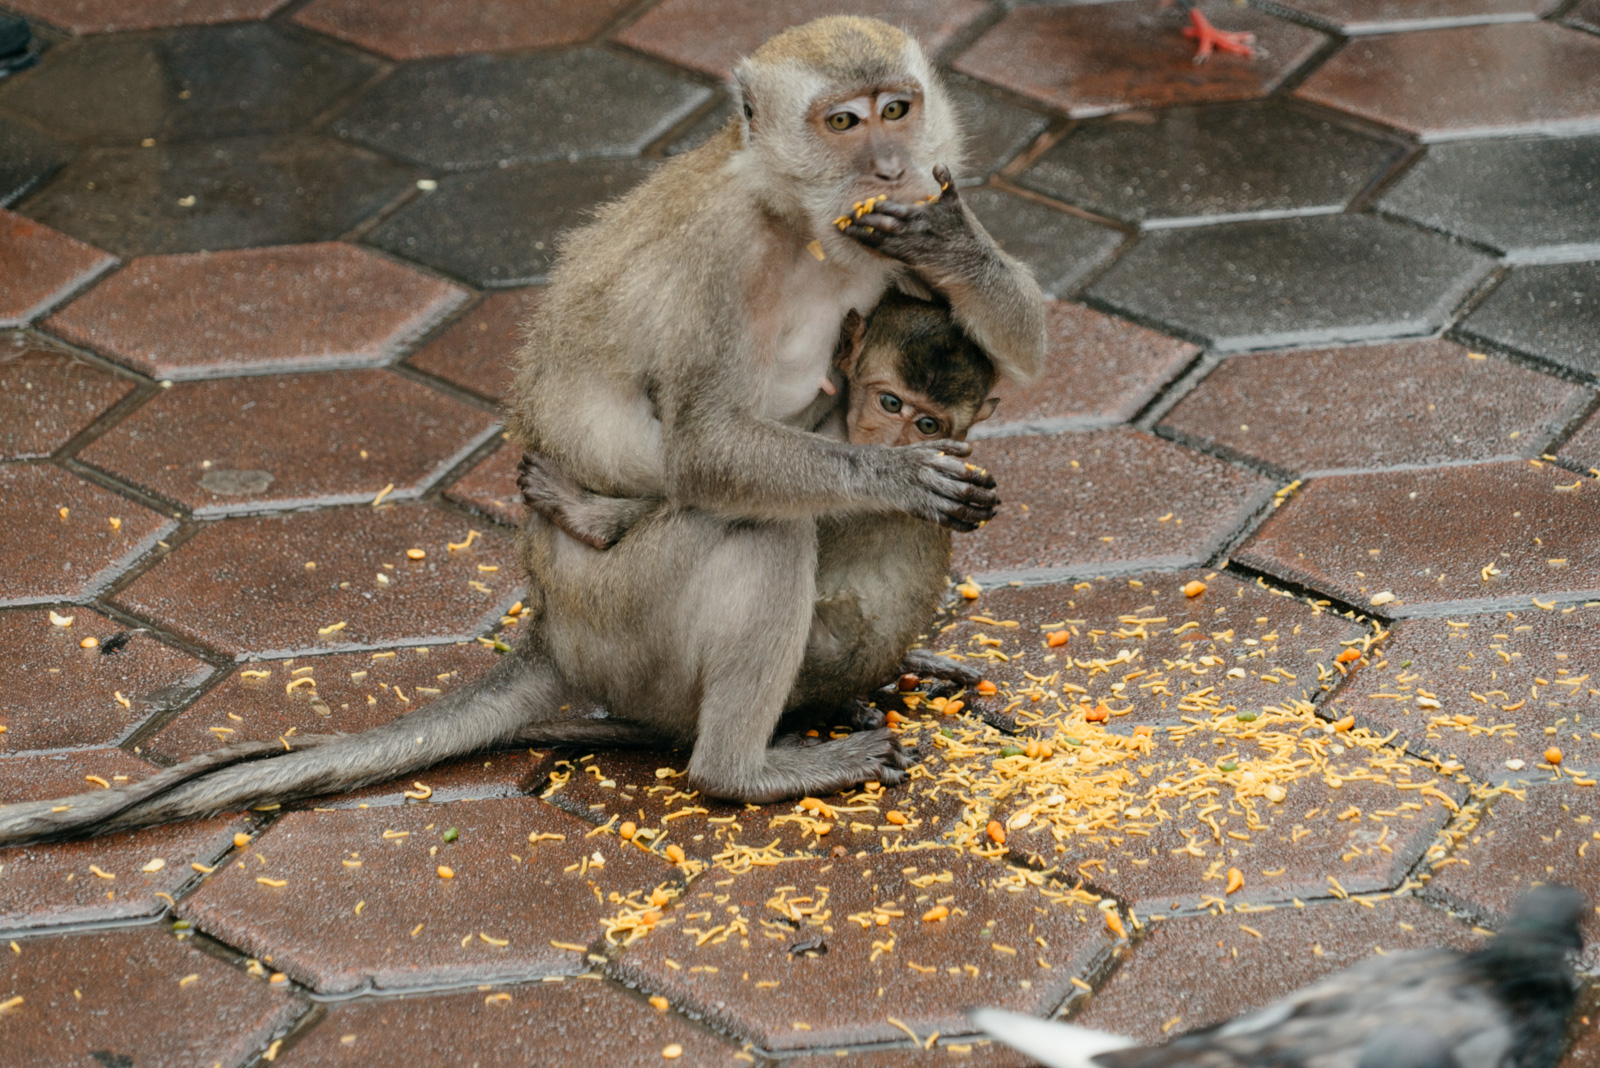 The Monkey Gangs of Kuala Lumpur, Malaysia